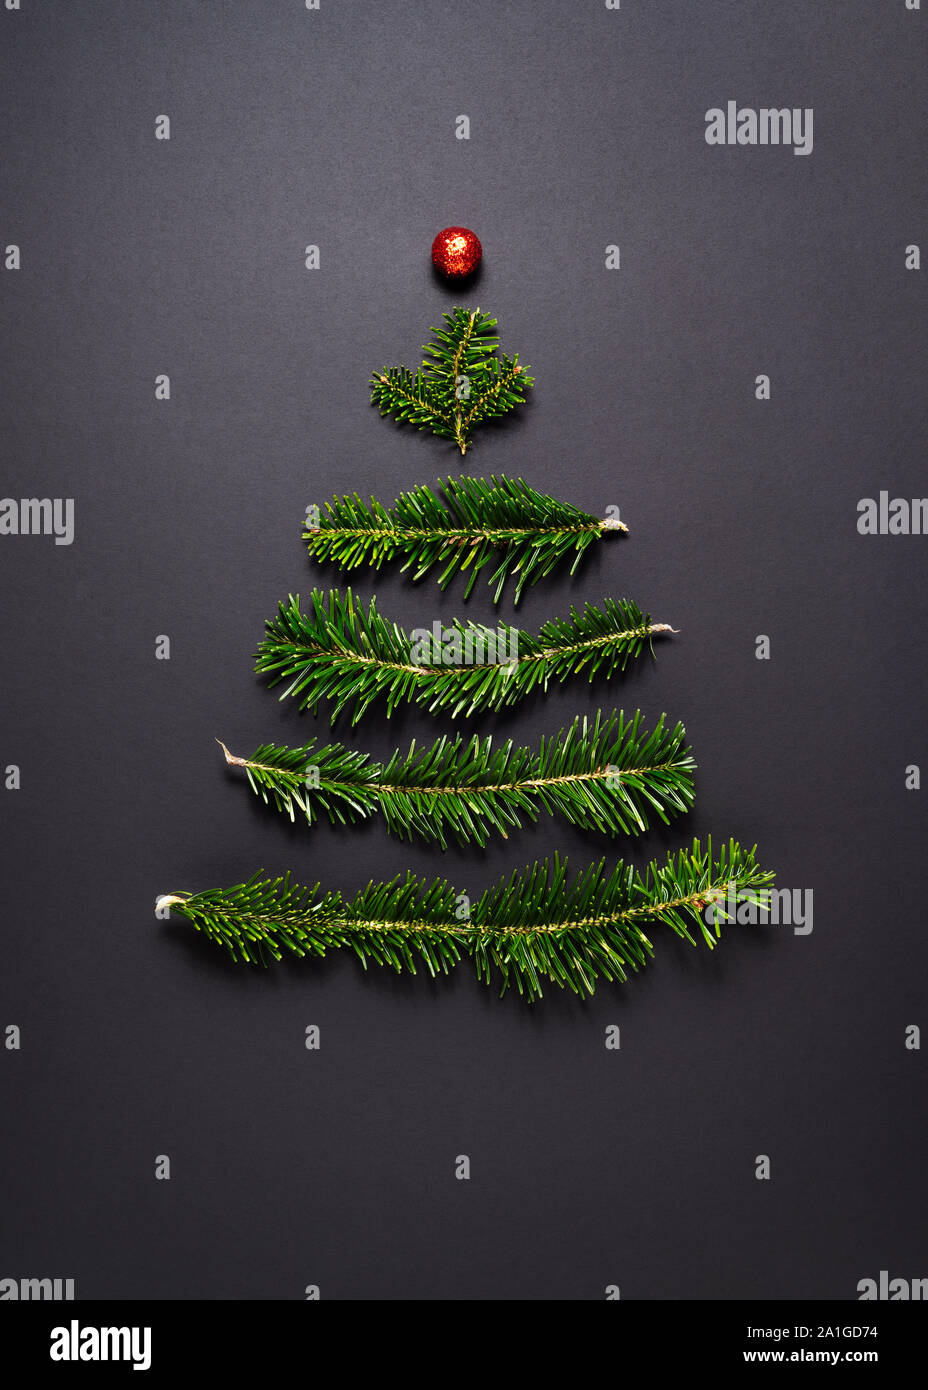 Christmas Greeting Card. Stylized Christmas tree on a black background Stock Photo